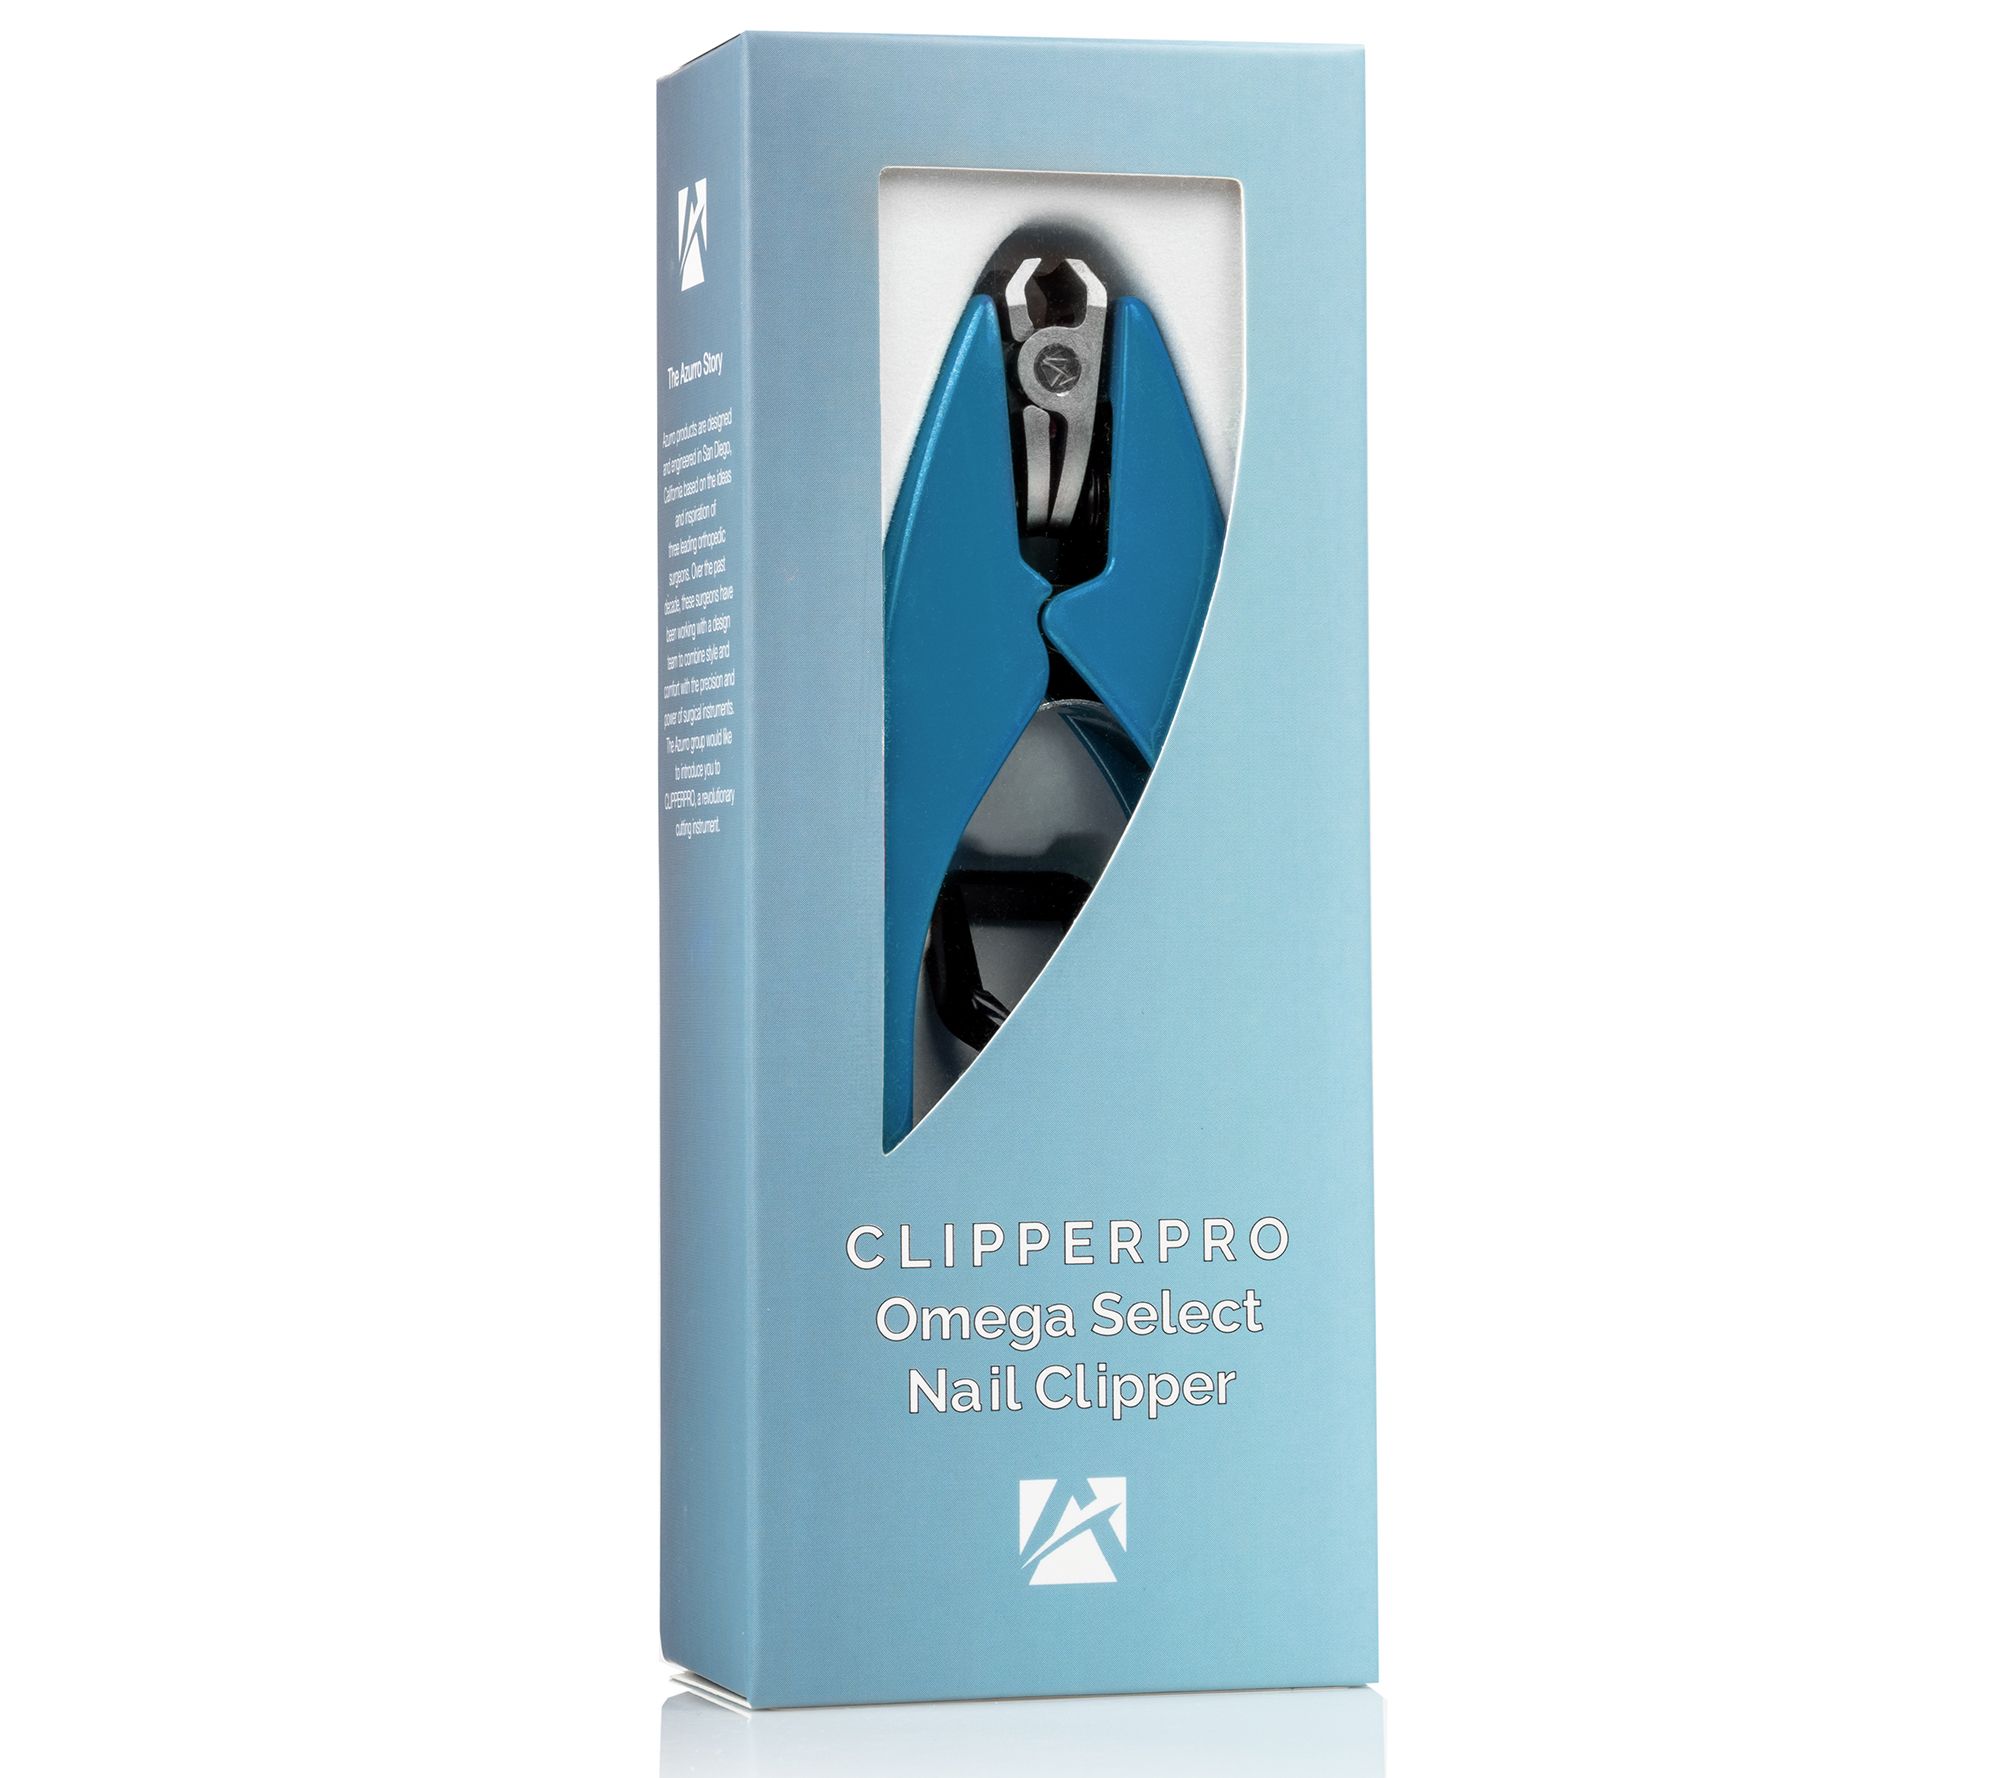 clipperpro nail clipper amazon